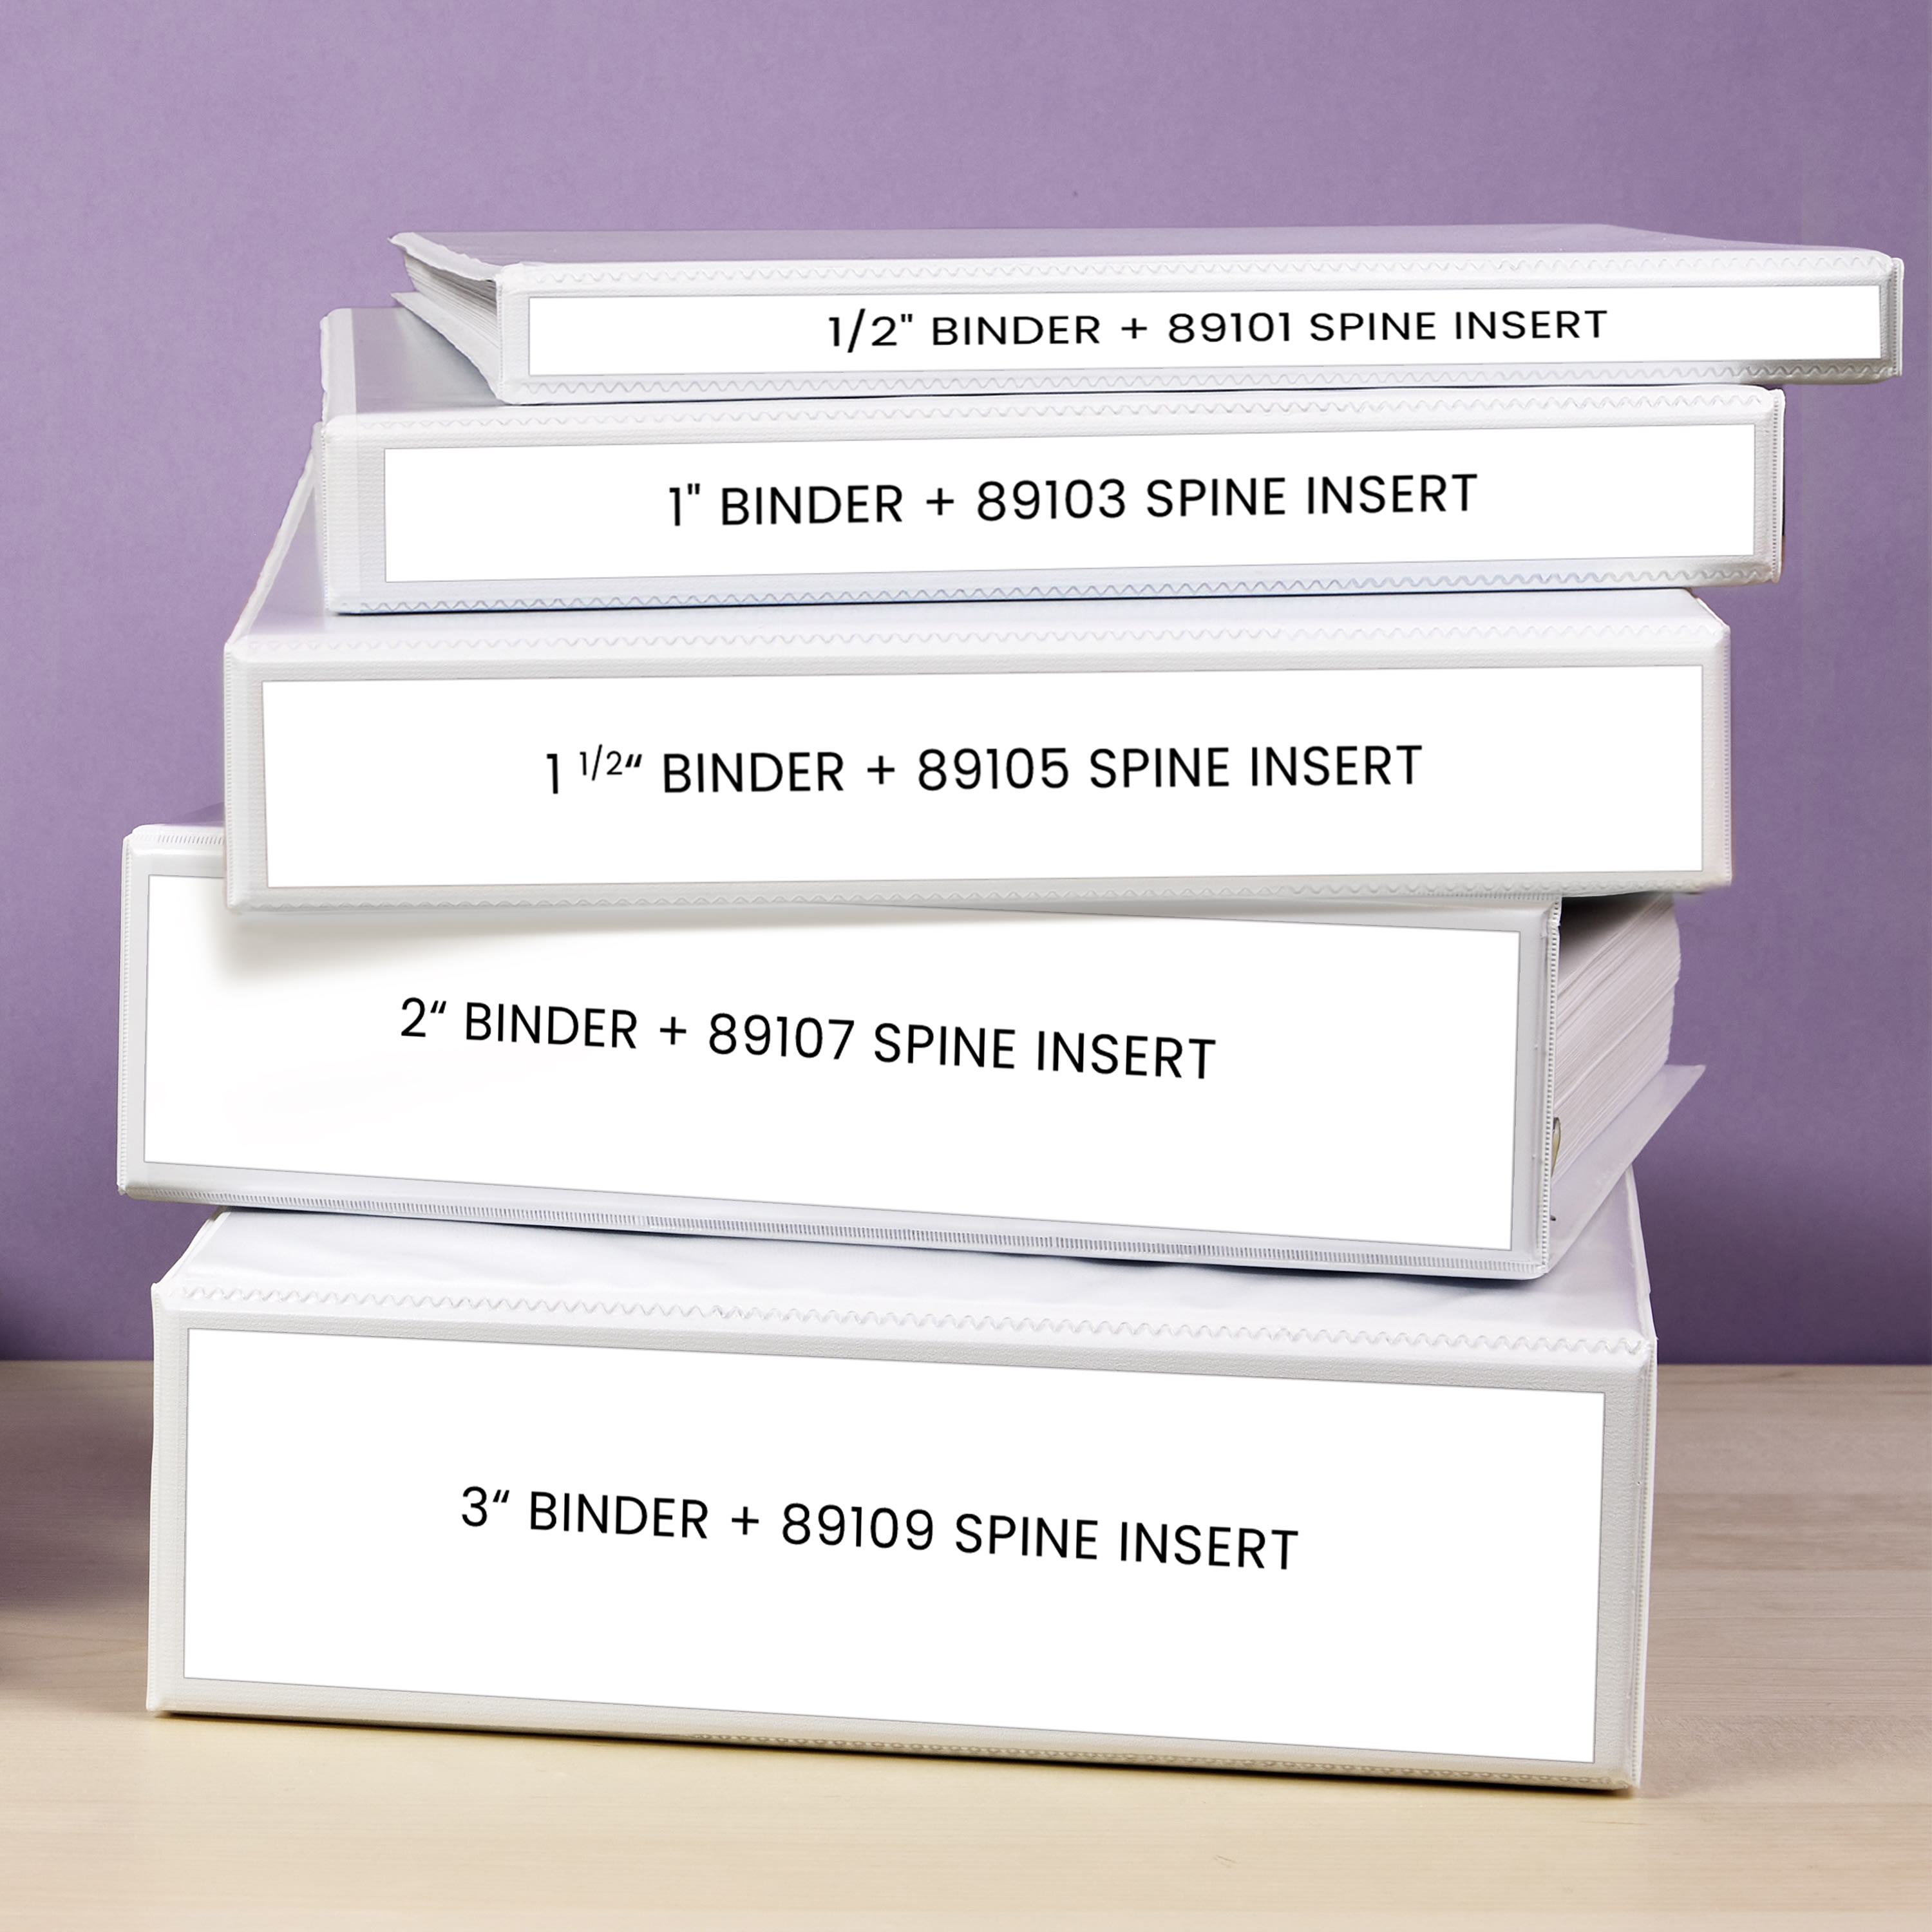 how-to-make-custom-binder-spine-inserts-avery